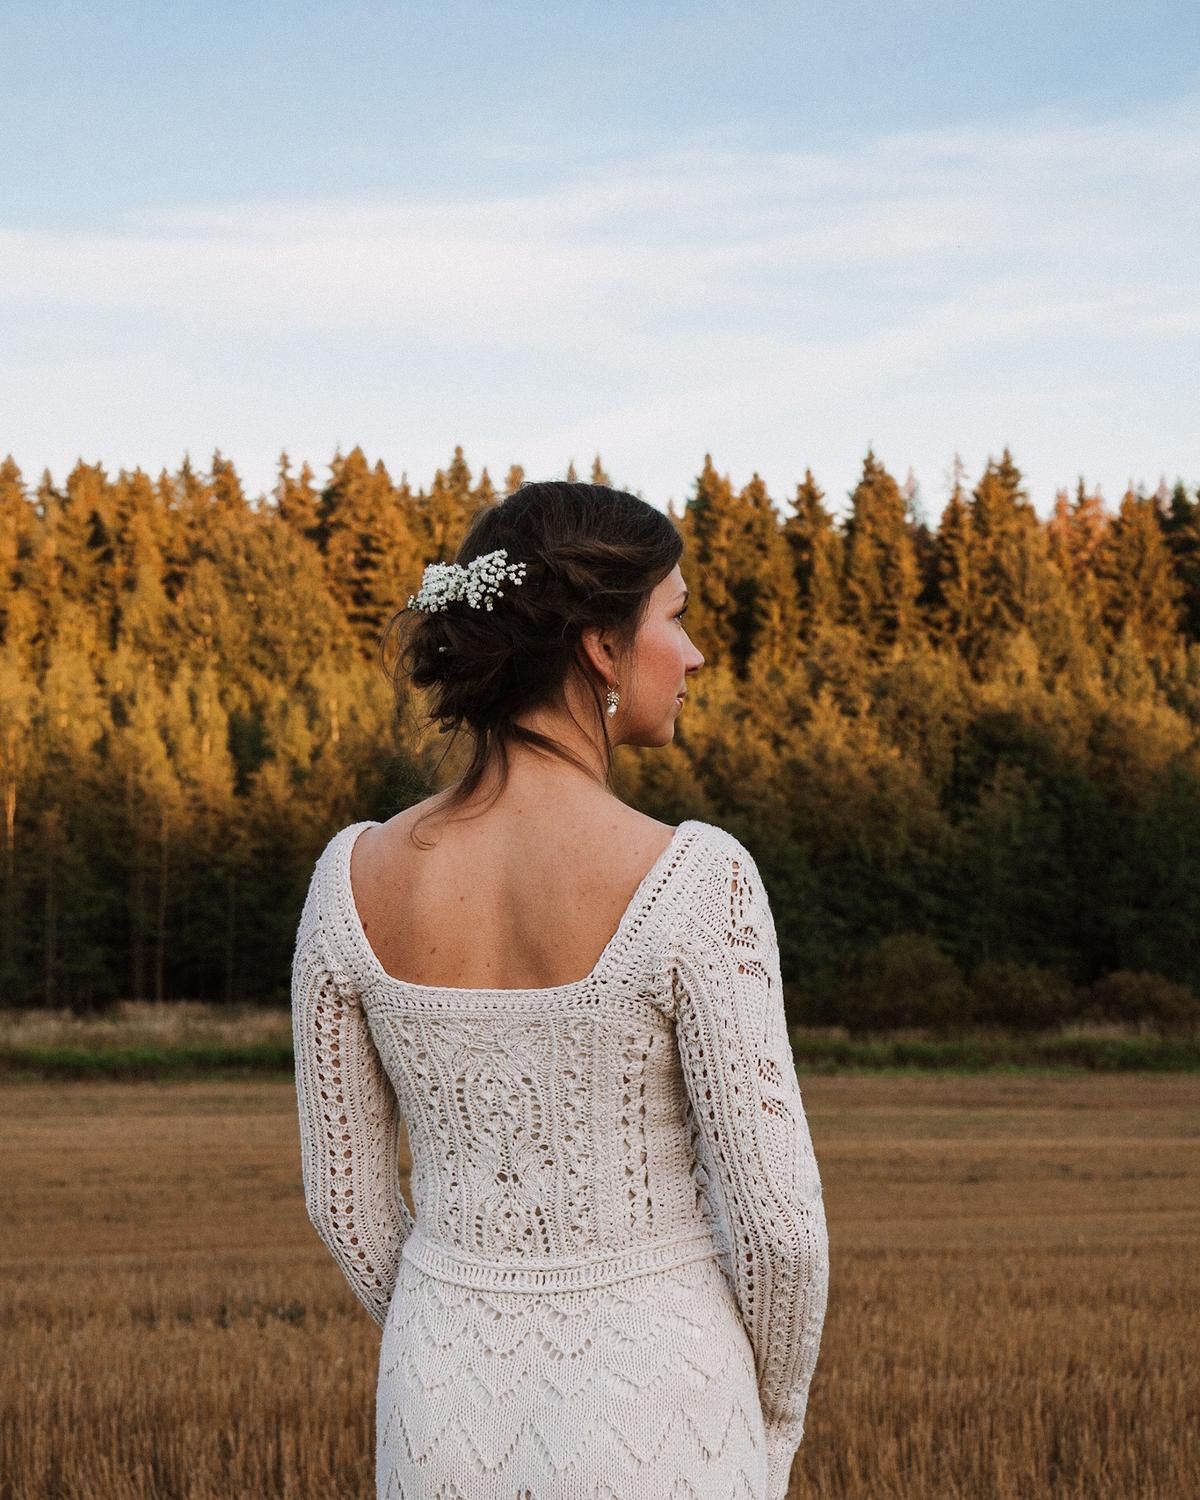 Veronika Lindberg wearing her knitted wedding dress, displaying its square-shaped neckline. (Courtesy of Jukka Heino)